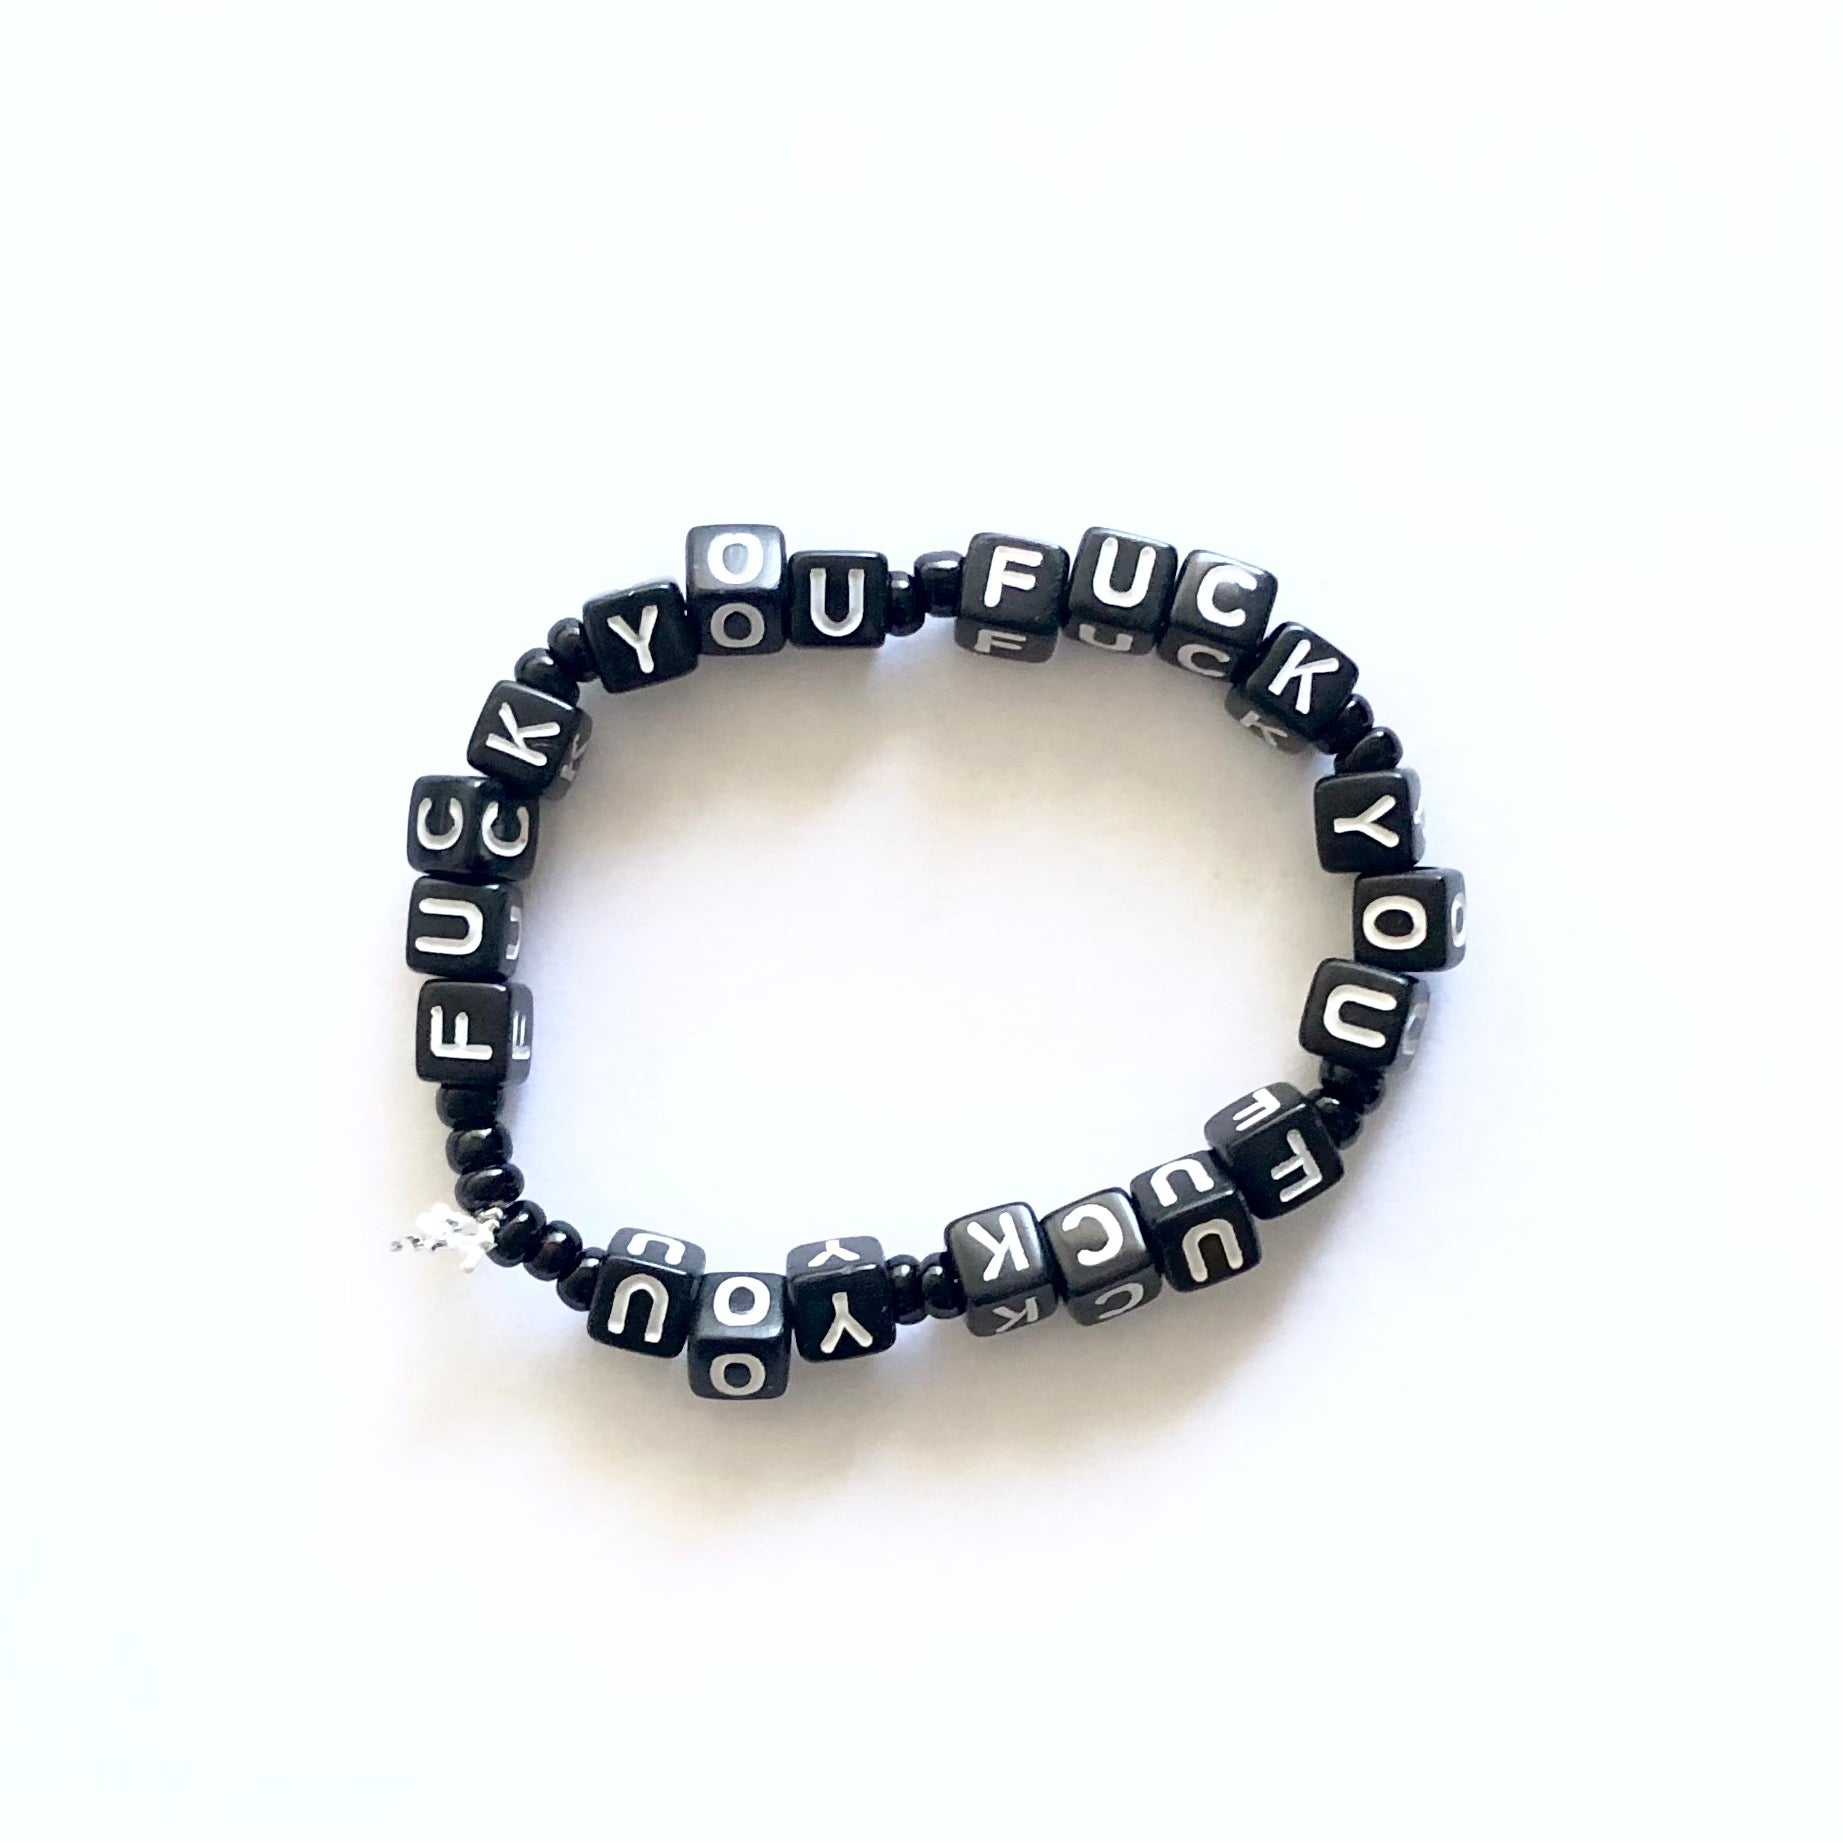 Fuck You [bracelet][black]